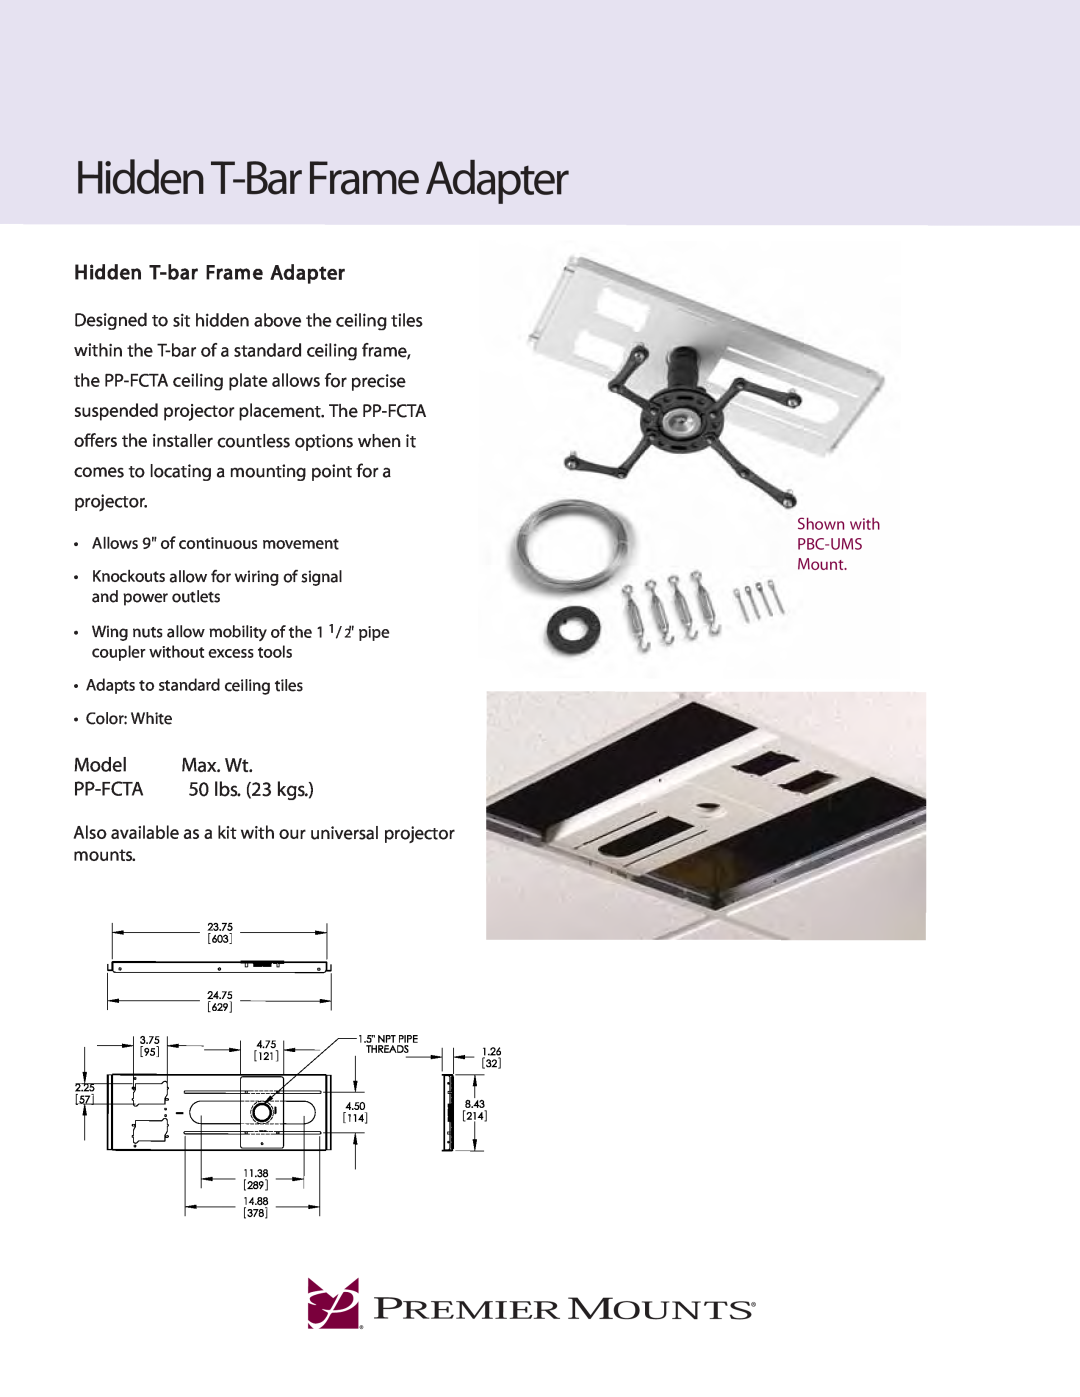 Premier Mounts PP-FCMA manual HiddenT-BarFrameAdapter, Hidden T-barFrame Adapter, Model, Max. Wt, Pp-Fcta, 50 lbs. 23 kgs 